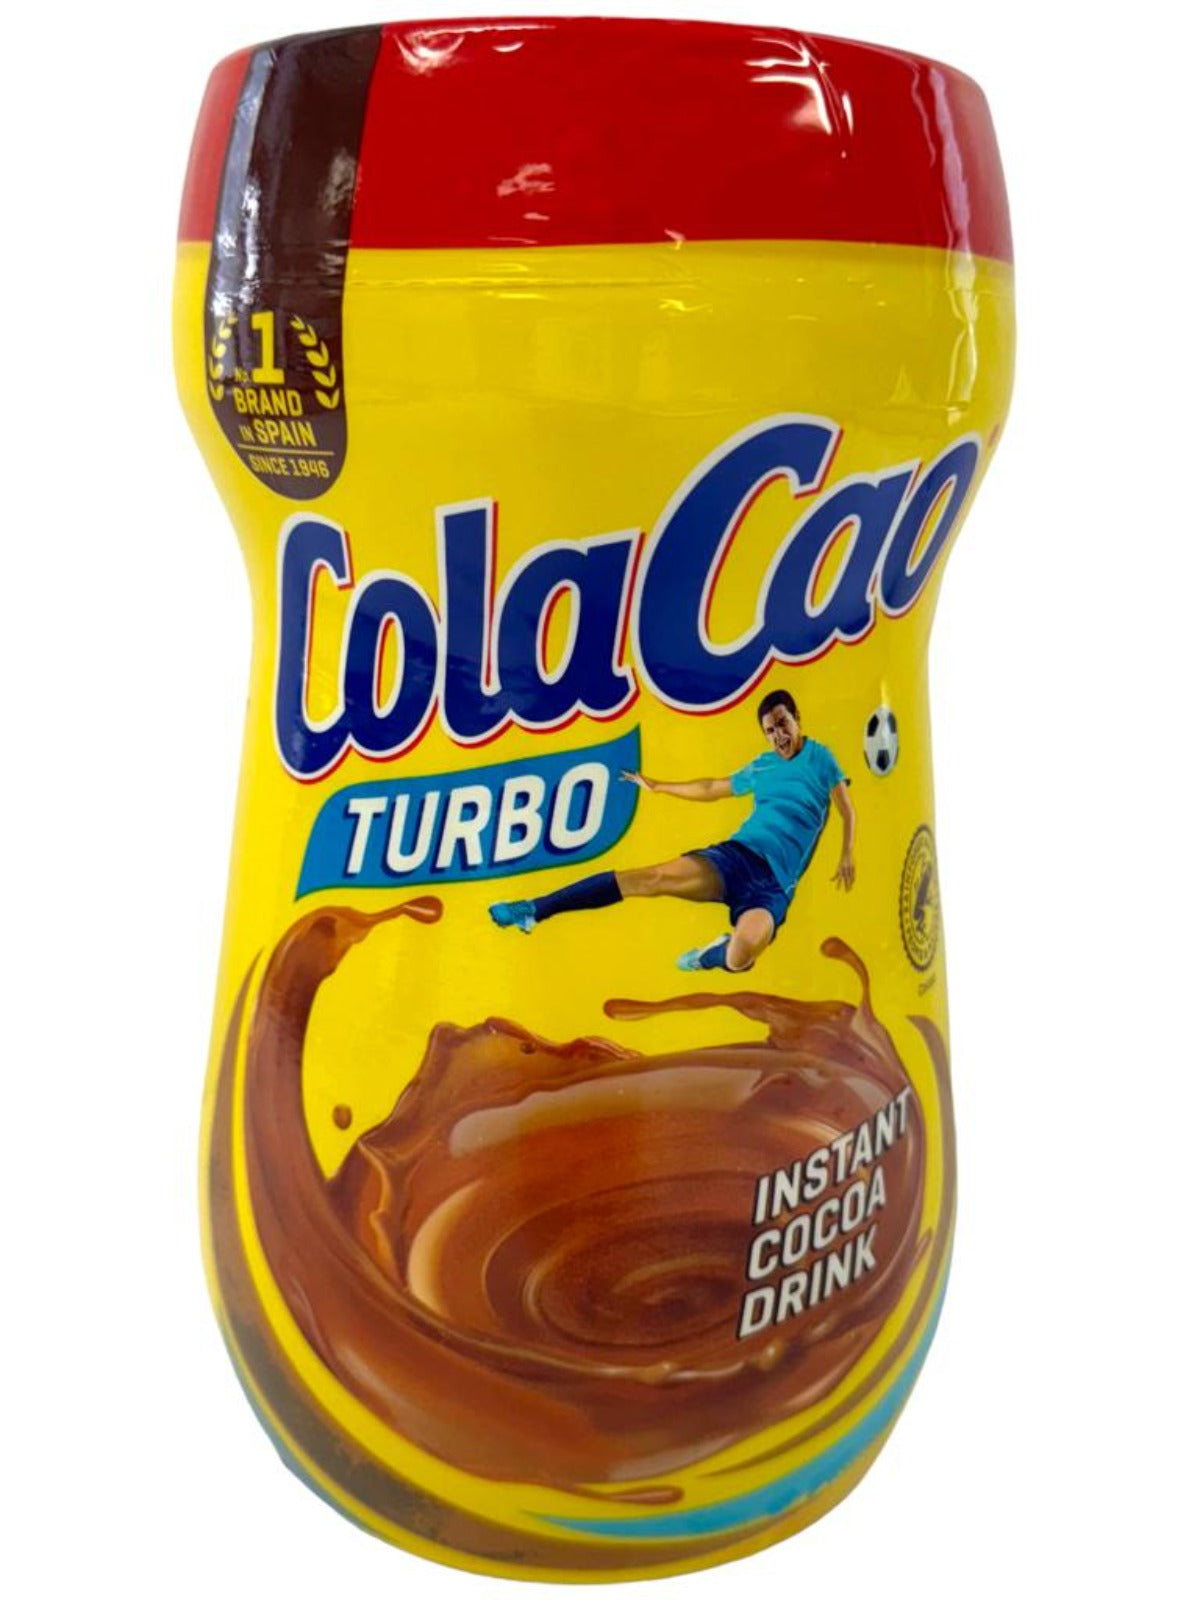 cola cao - turbo